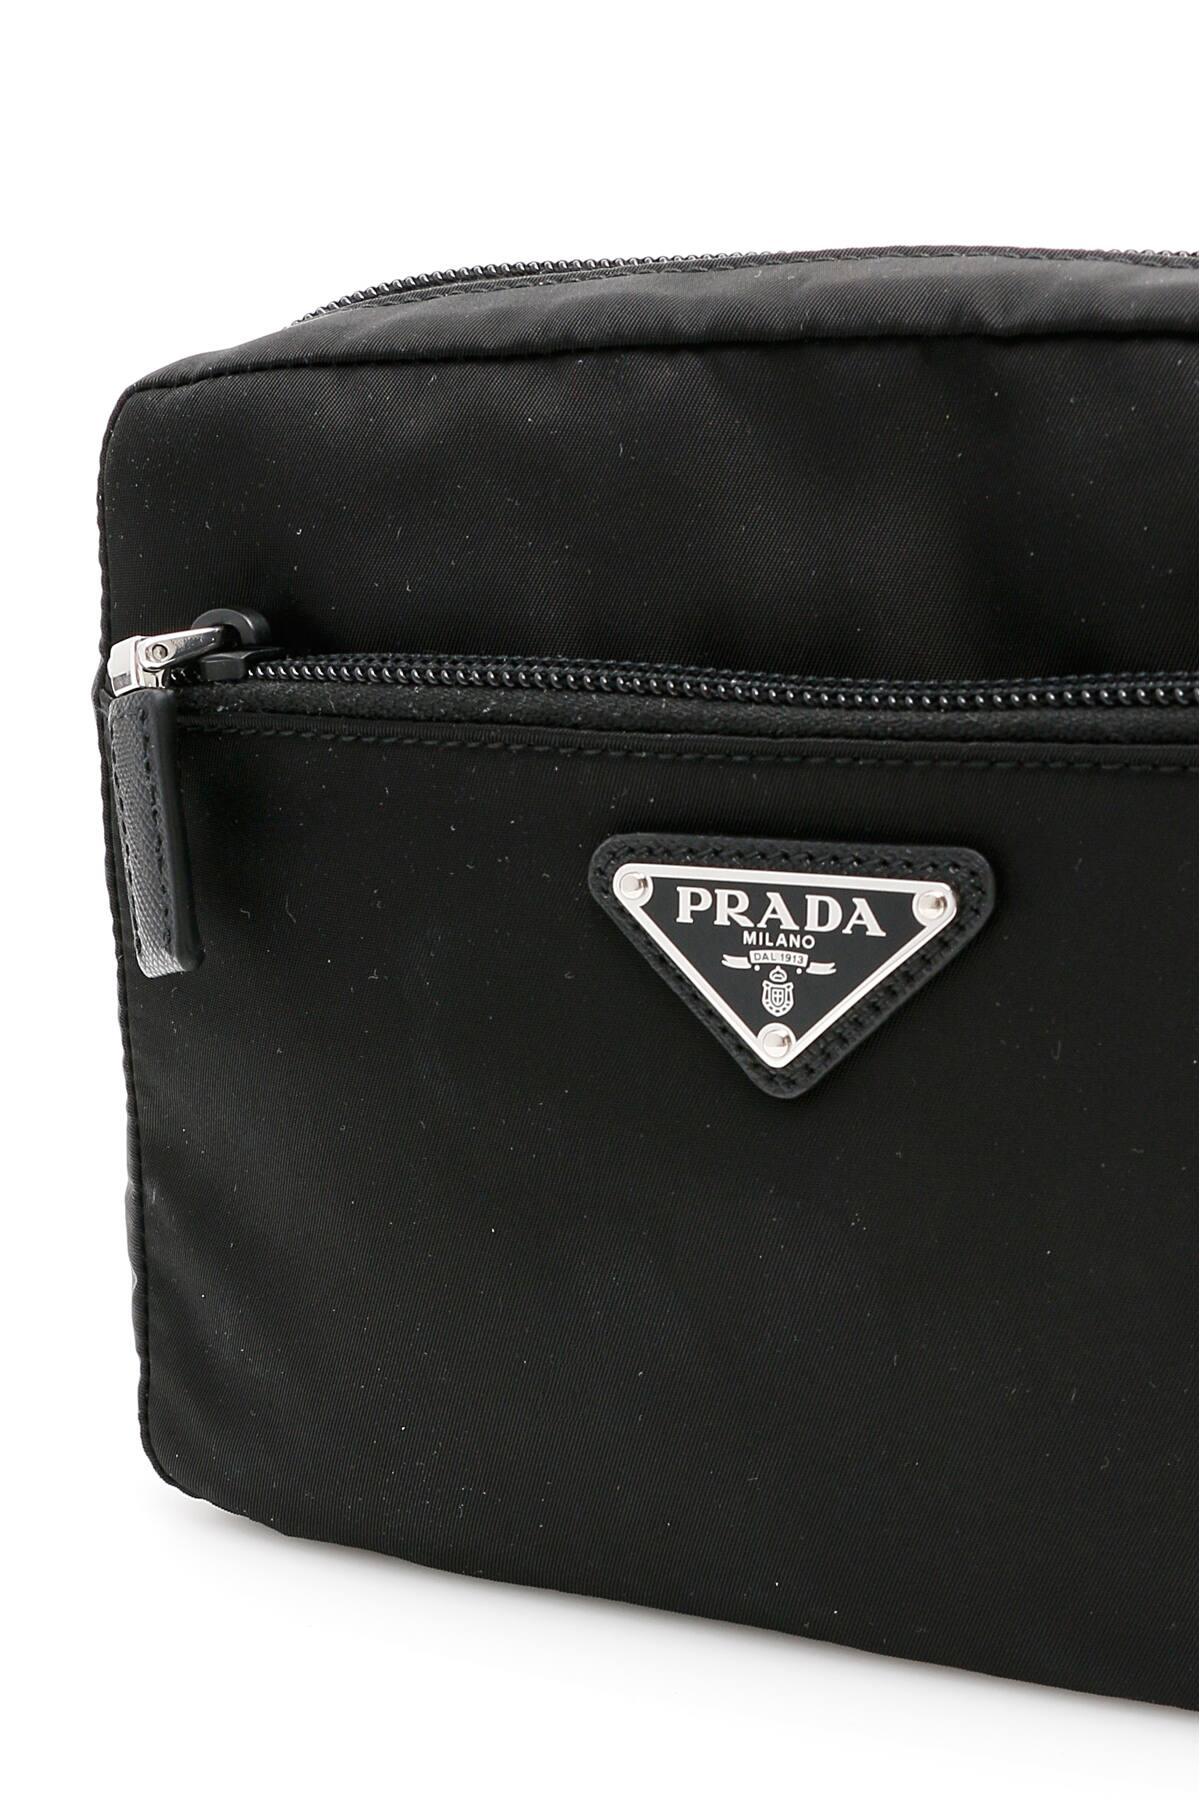 Prada Re-Nylon And Leather Travel Pouch - Farfetch